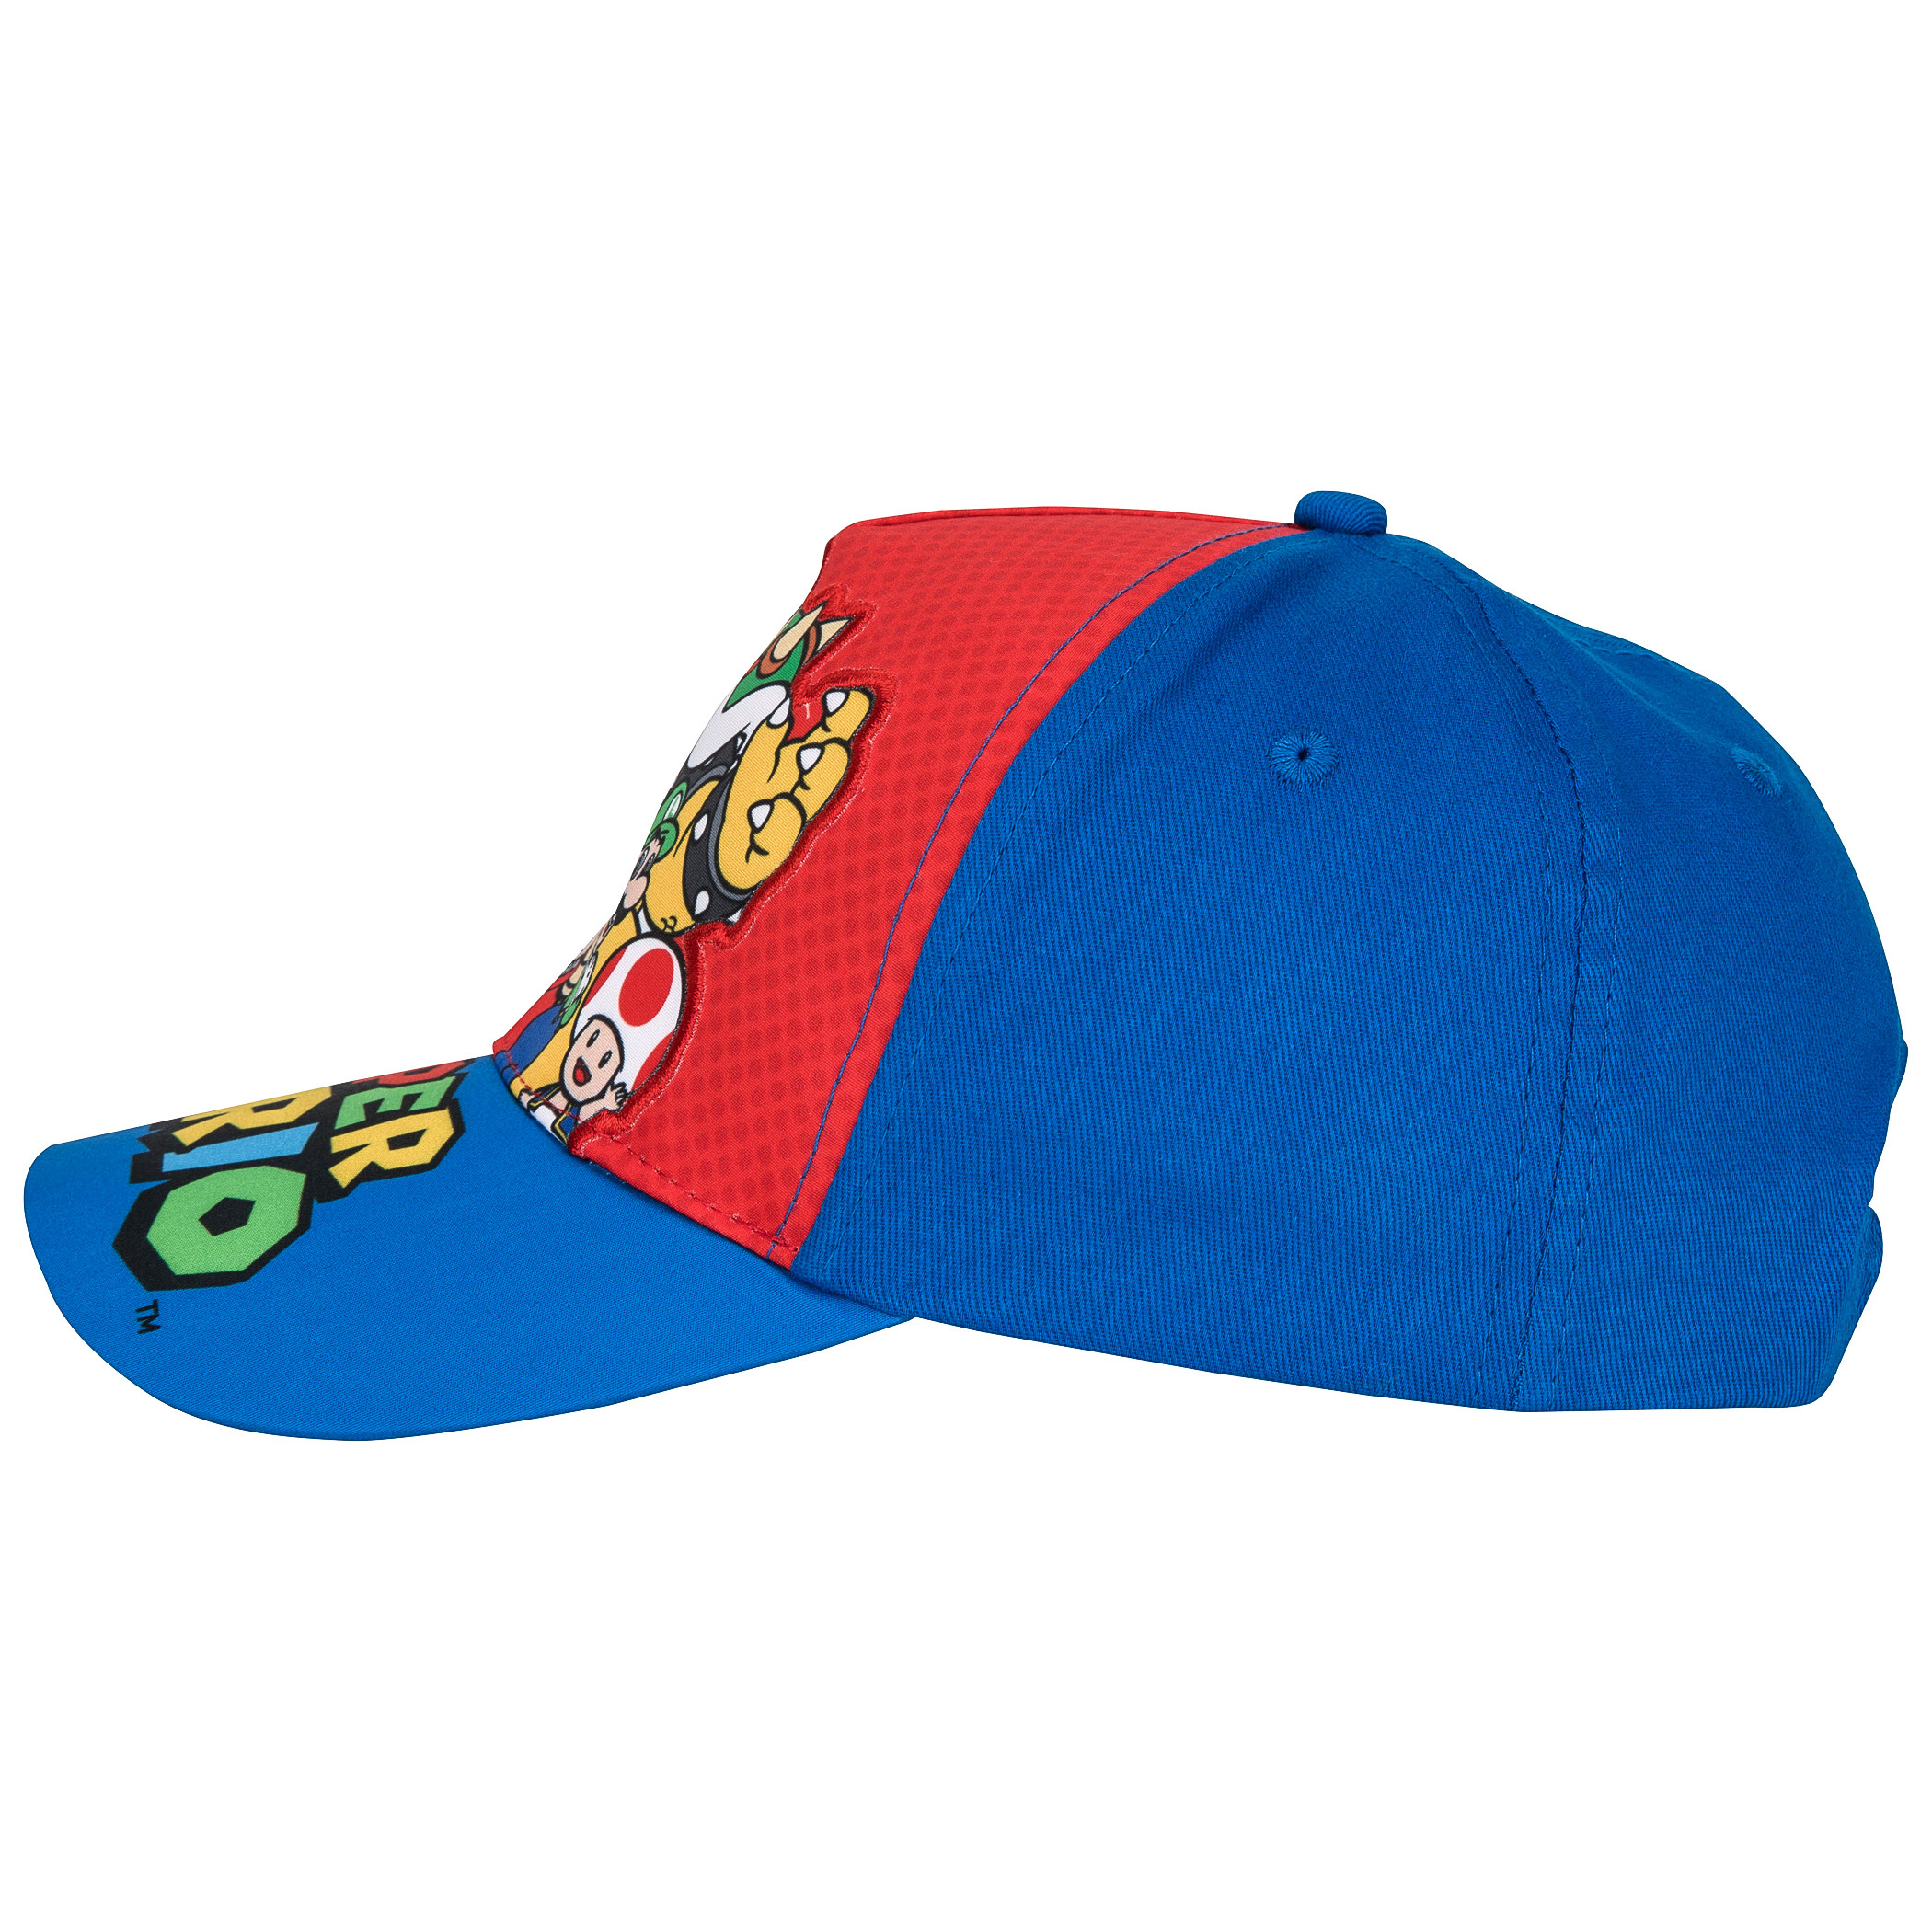 Super Mario Bros. Group Photo Hat